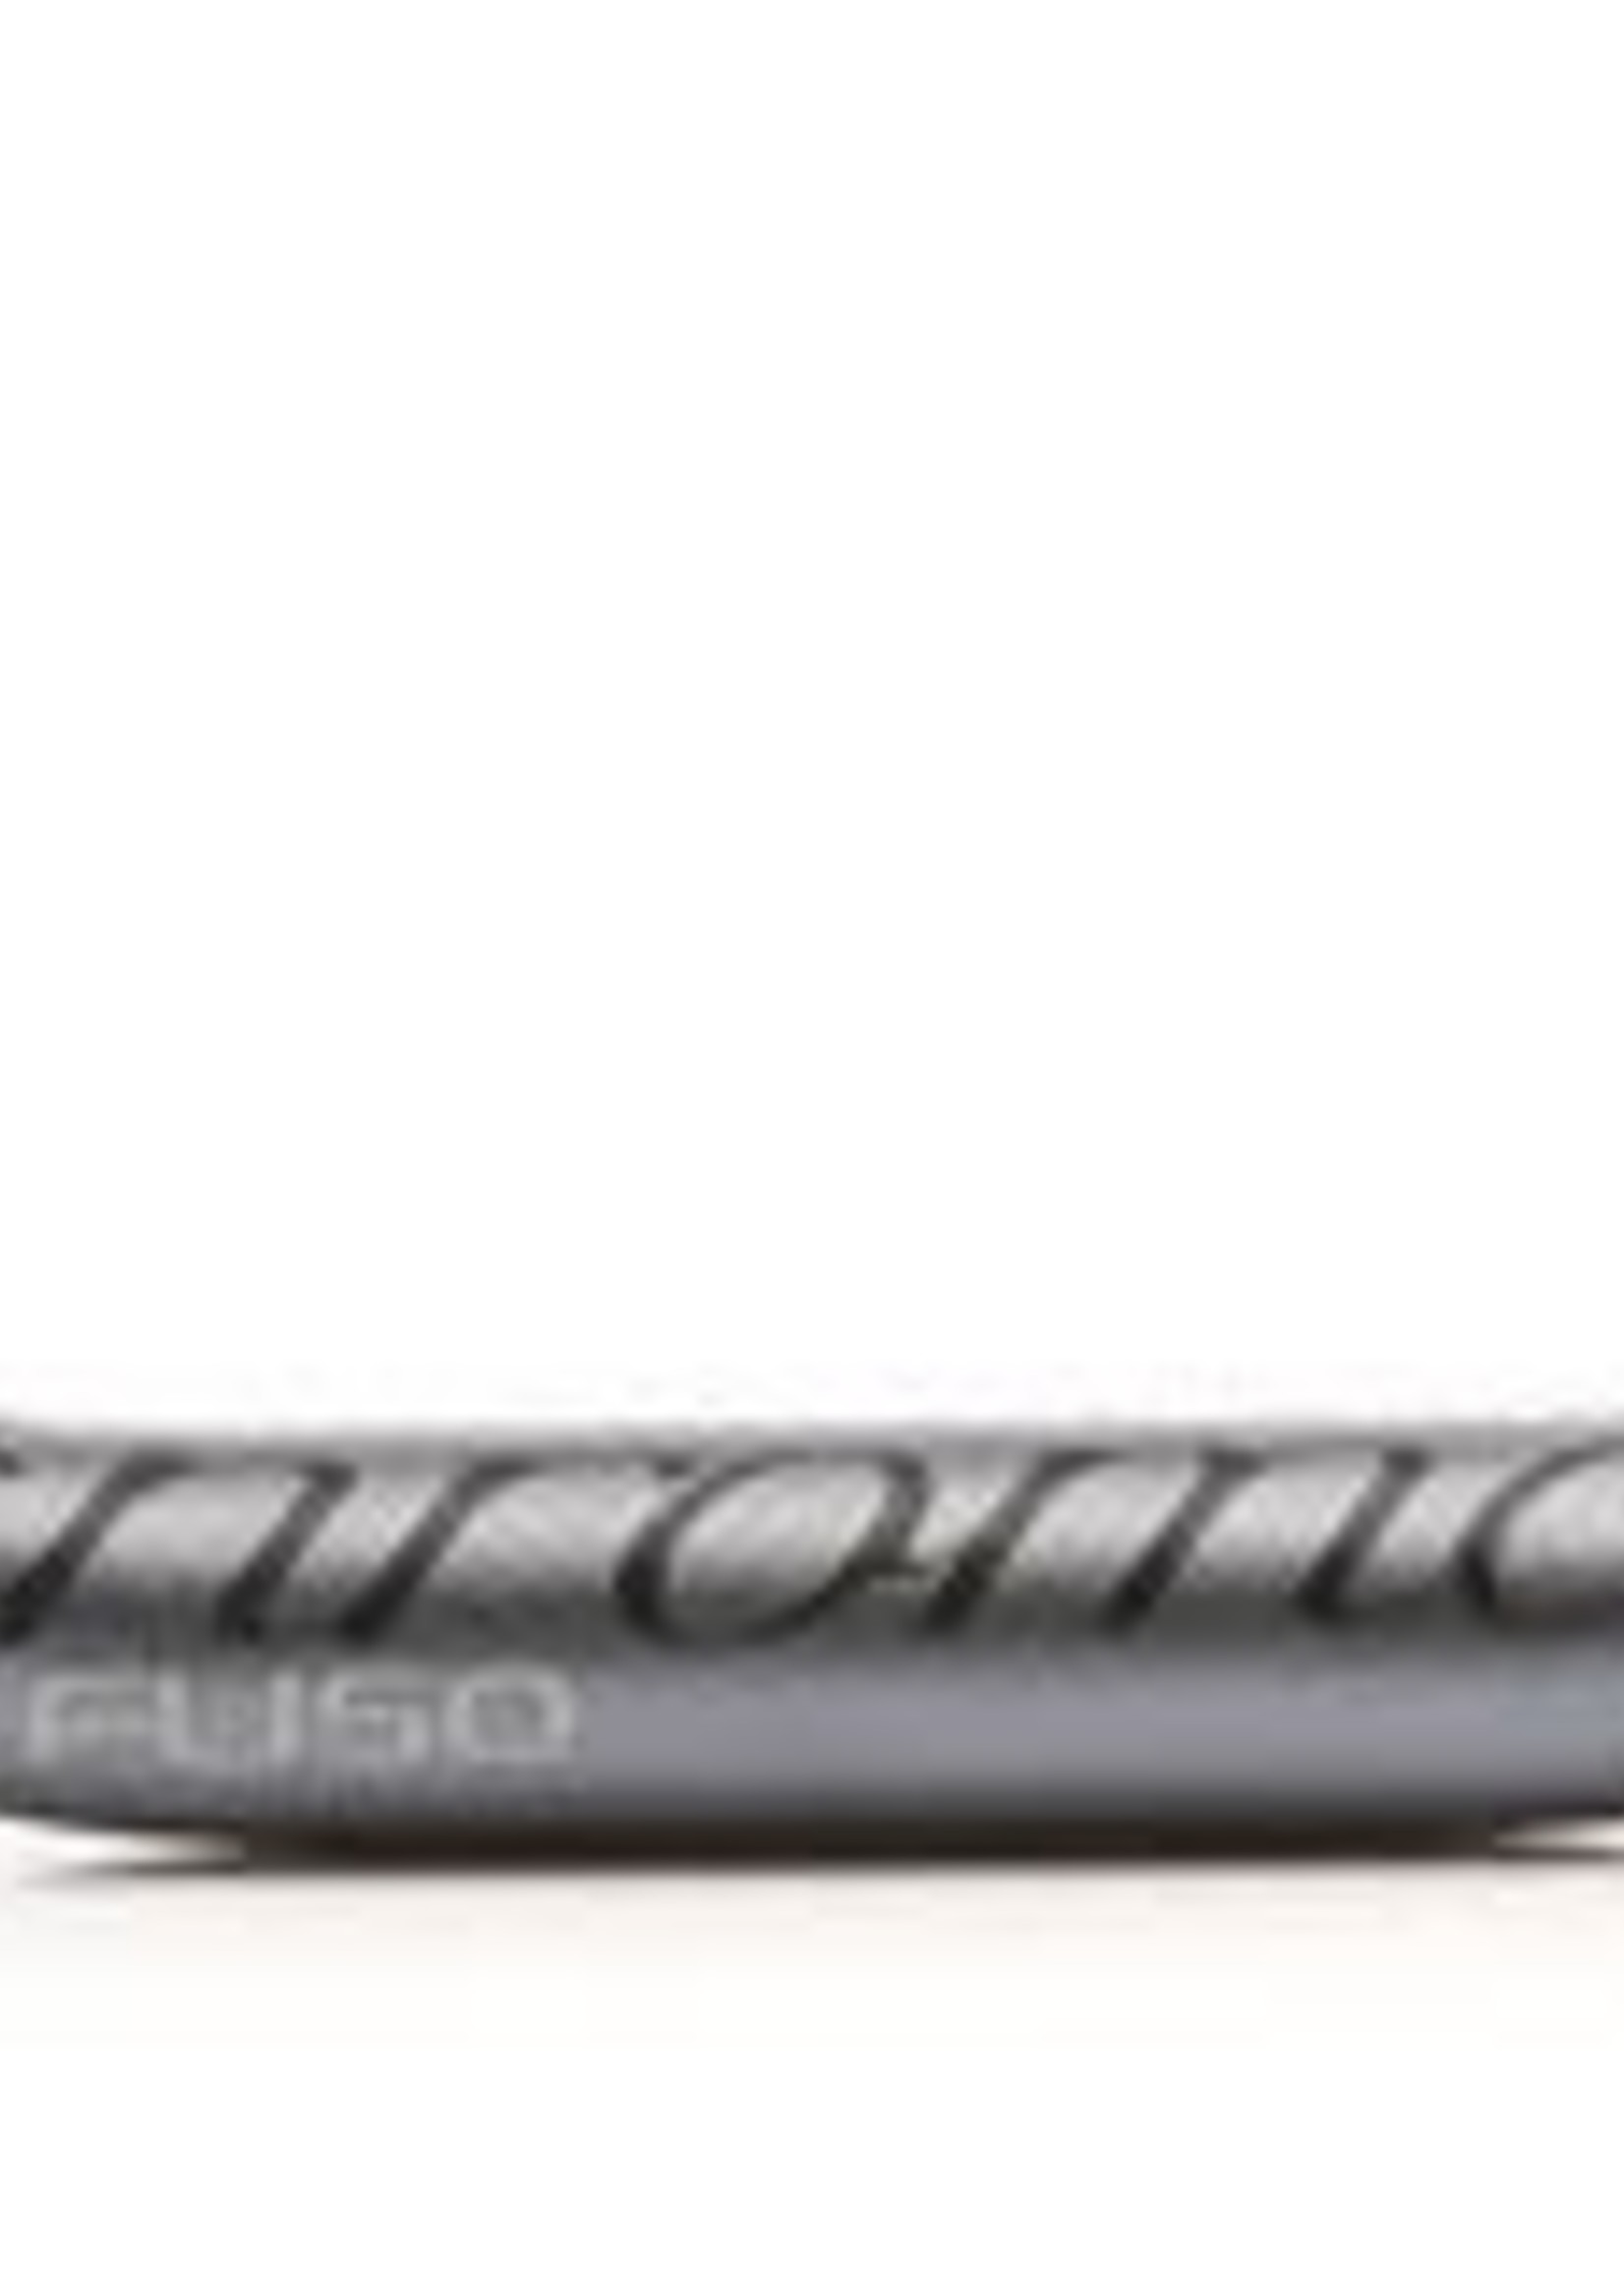 CHROMAG Chromag Bar Fubar FU50 31.8 x 800mm 50mm Rise